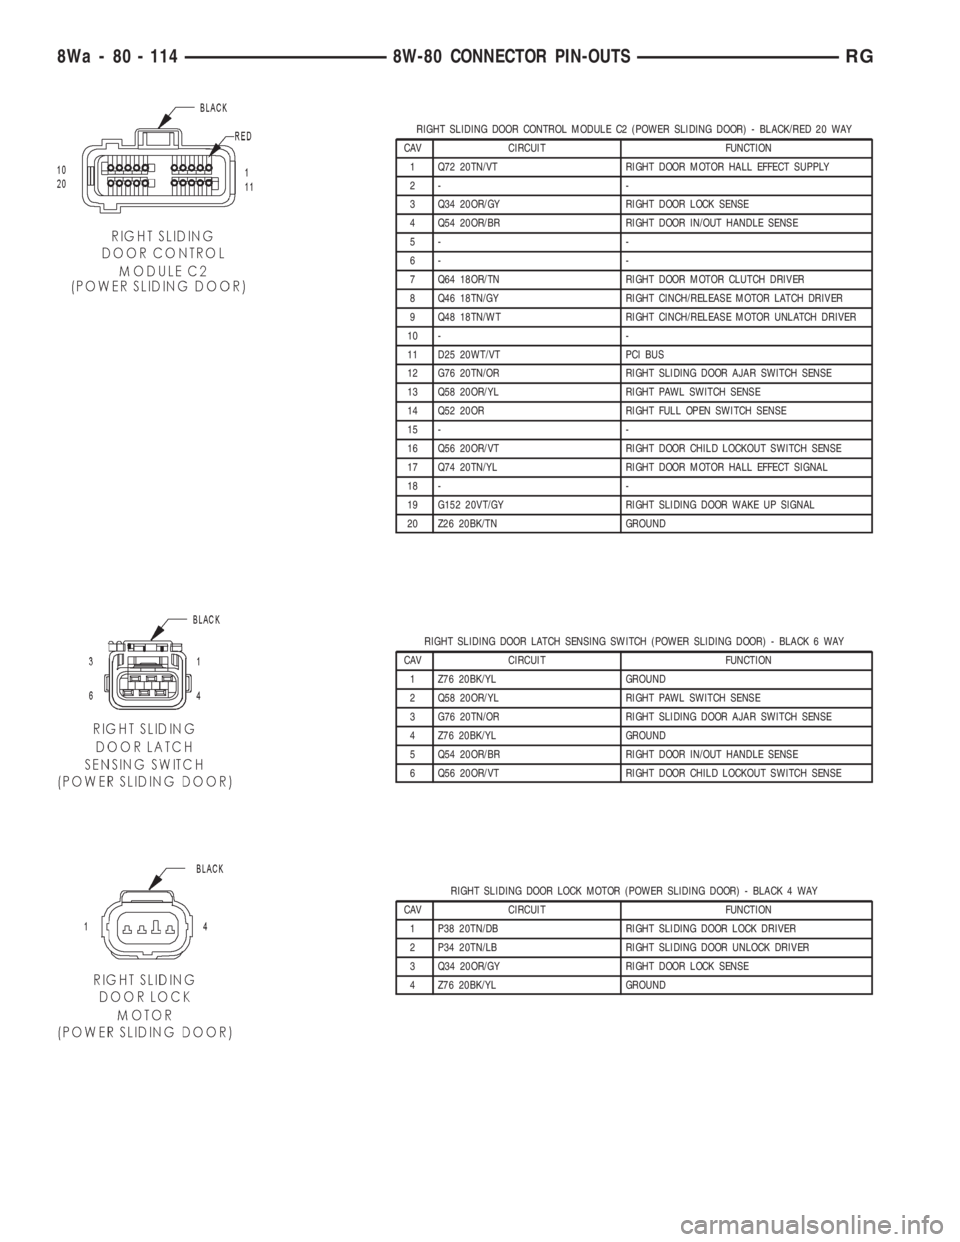 CHRYSLER VOYAGER 2001  Service Manual RIGHT SLIDING DOOR CONTROL MODULE C2 (POWER SLIDING DOOR) - BLACK/RED 20 WAY
CAV CIRCUIT FUNCTION
1 Q72 20TN/VT RIGHT DOOR MOTOR HALL EFFECT SUPPLY
2- -
3 Q34 20OR/GY RIGHT DOOR LOCK SENSE
4 Q54 20OR/